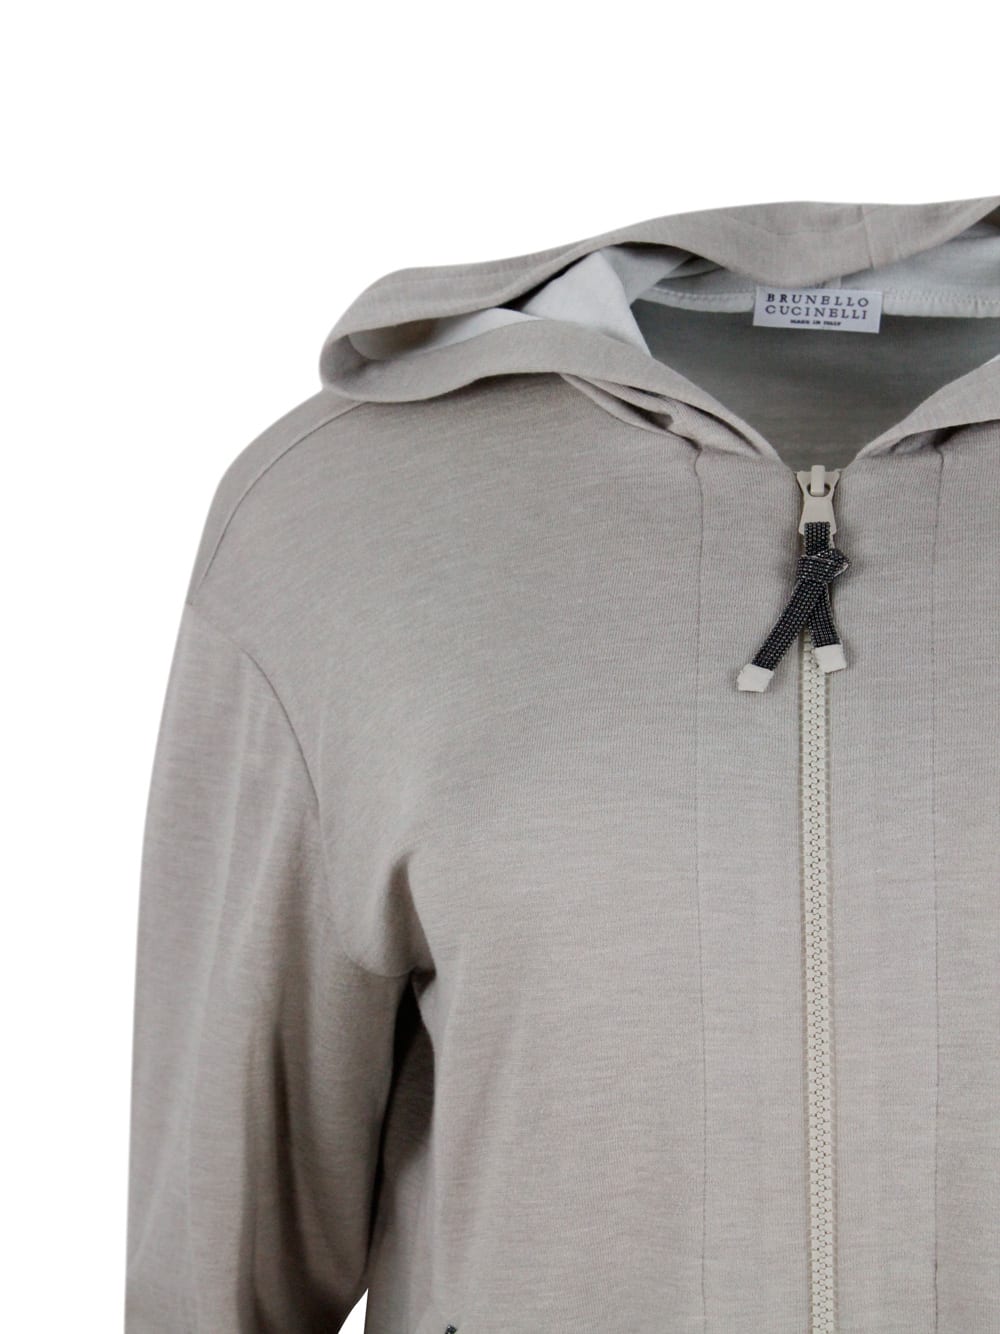 Shop Brunello Cucinelli Cotton And Silk Sweatshirt With Hood And Monili On The Zip In Beige